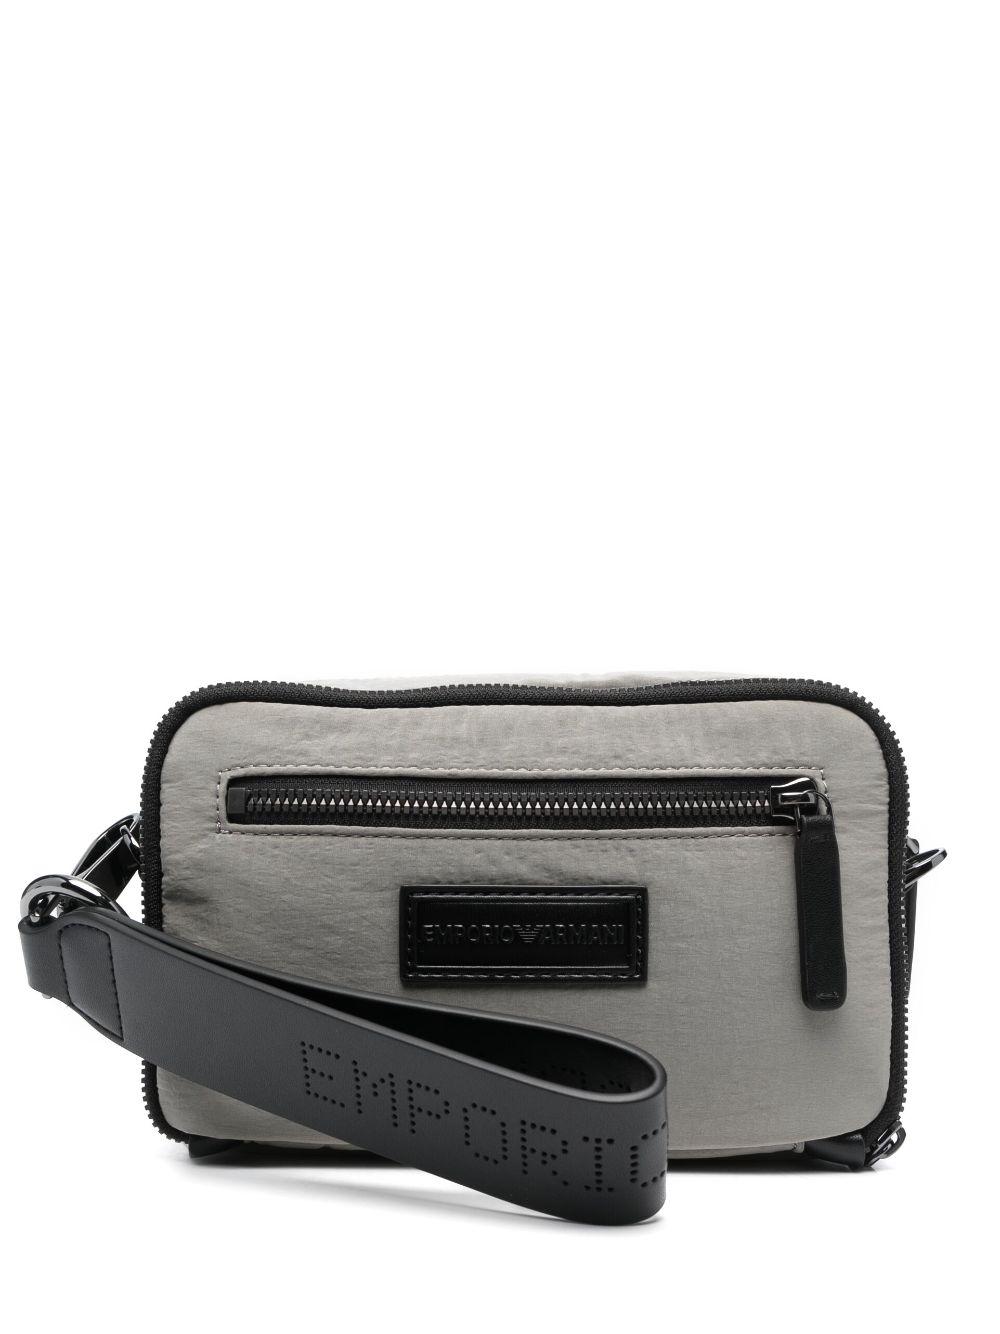 Emporio Armani Nylon Crossbody Bag in Gray for Men